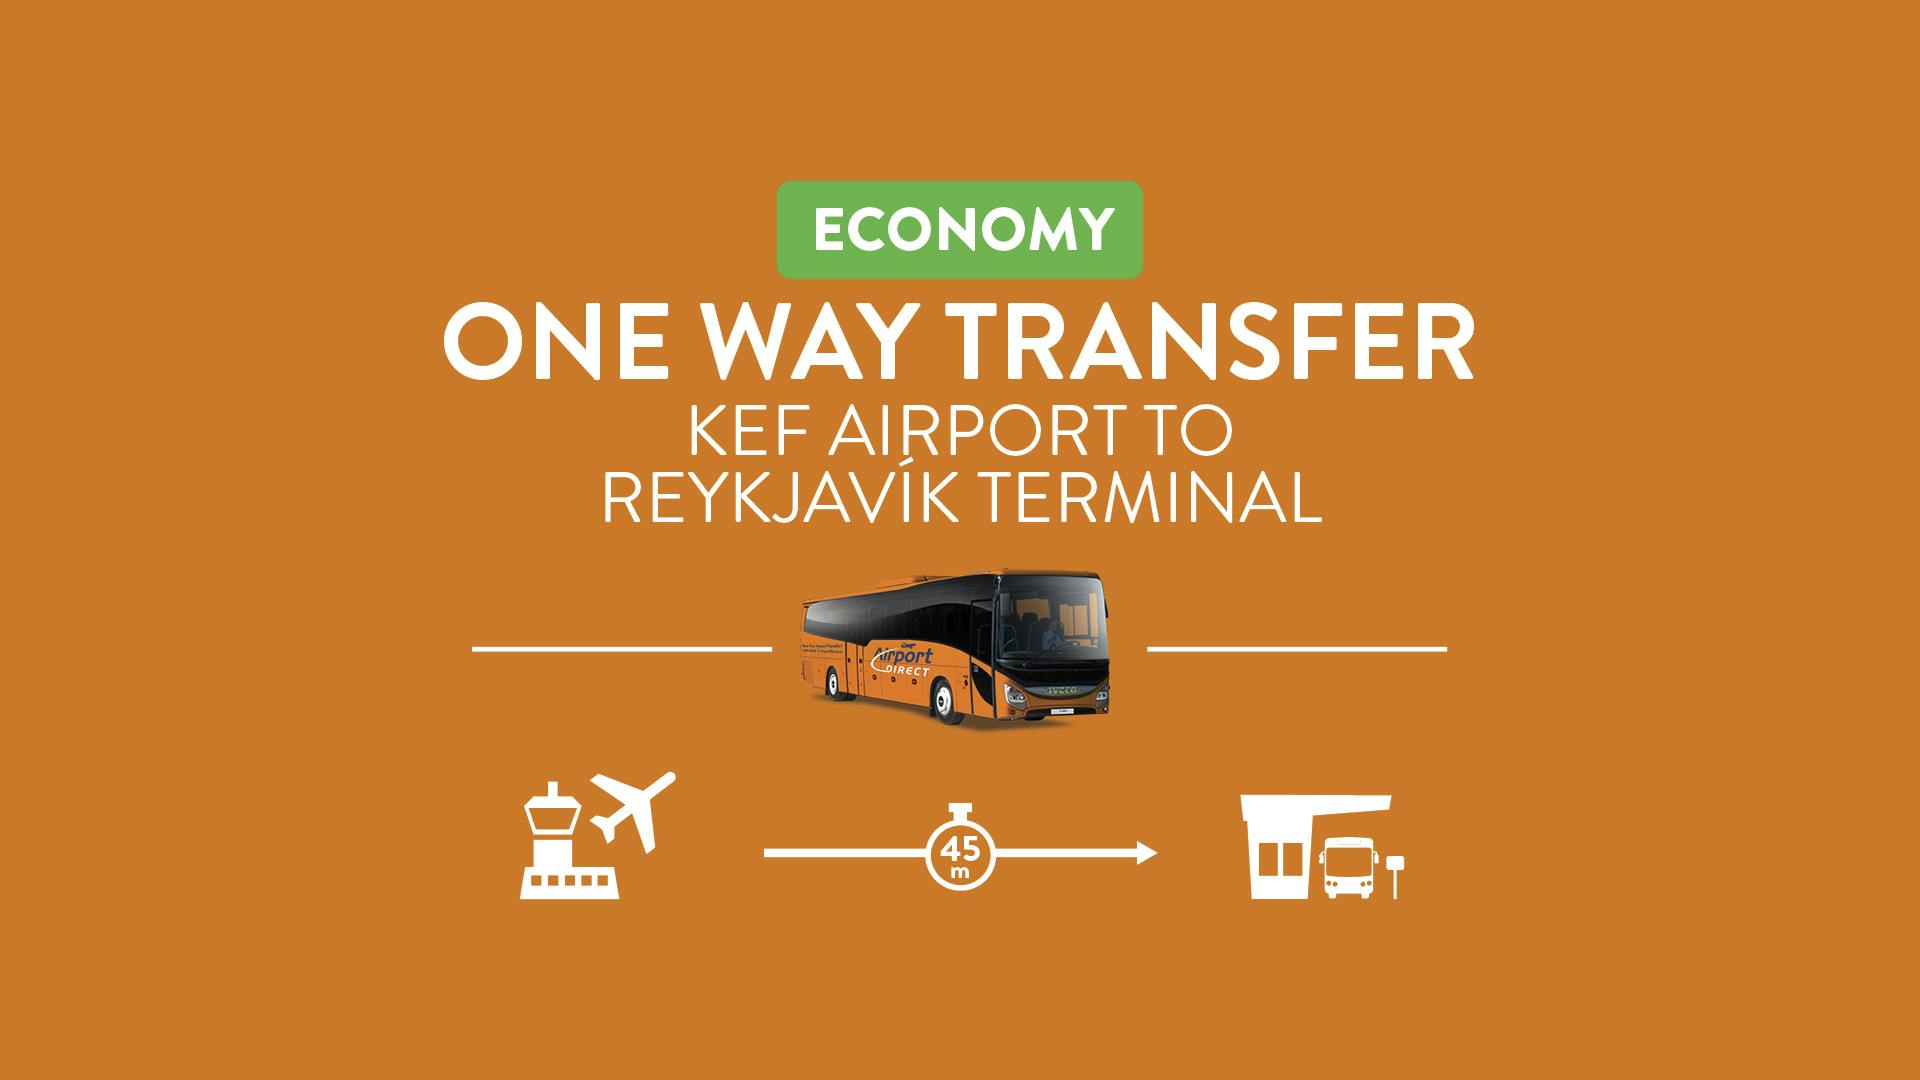 Keflavík Airport to Reykjavík Terminal - Hotel Drop-off Available